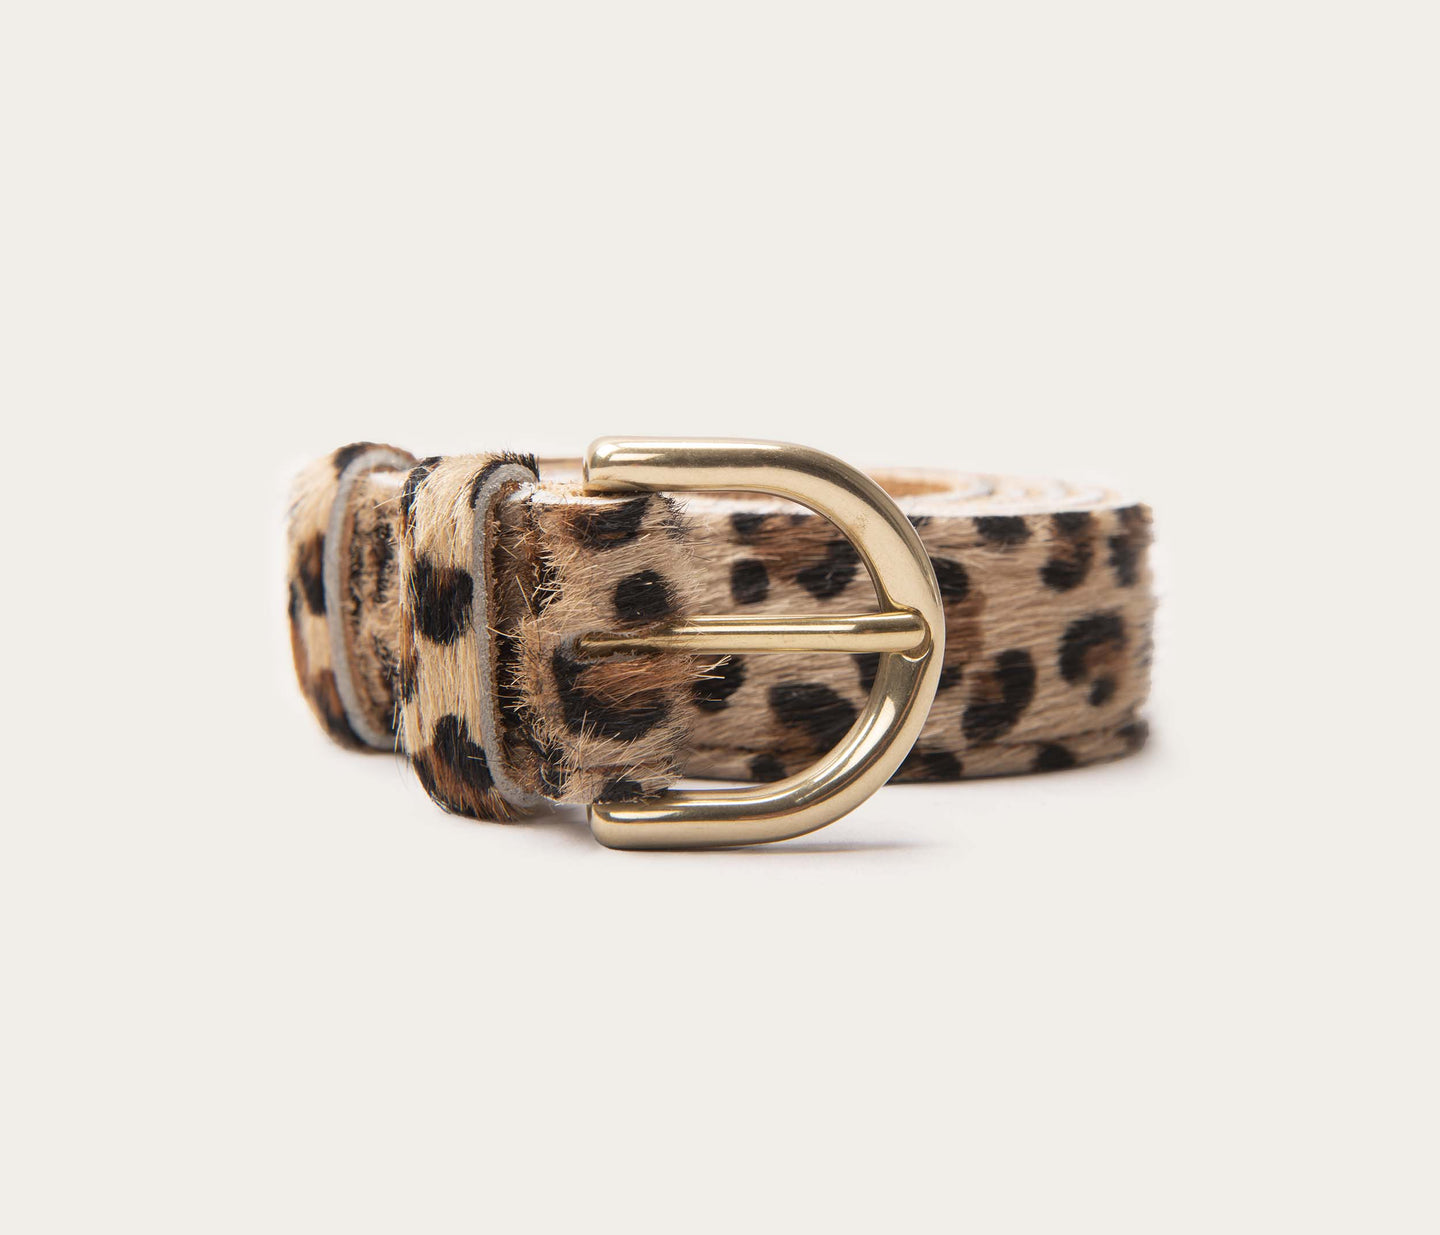 ceinture léopard, ceinture 25mm en cuir poil léopard, made in france, ceinture camarguaise, ceinture motif leopard, ceinture fabriquée en France, ceinture boucle or motif léopard